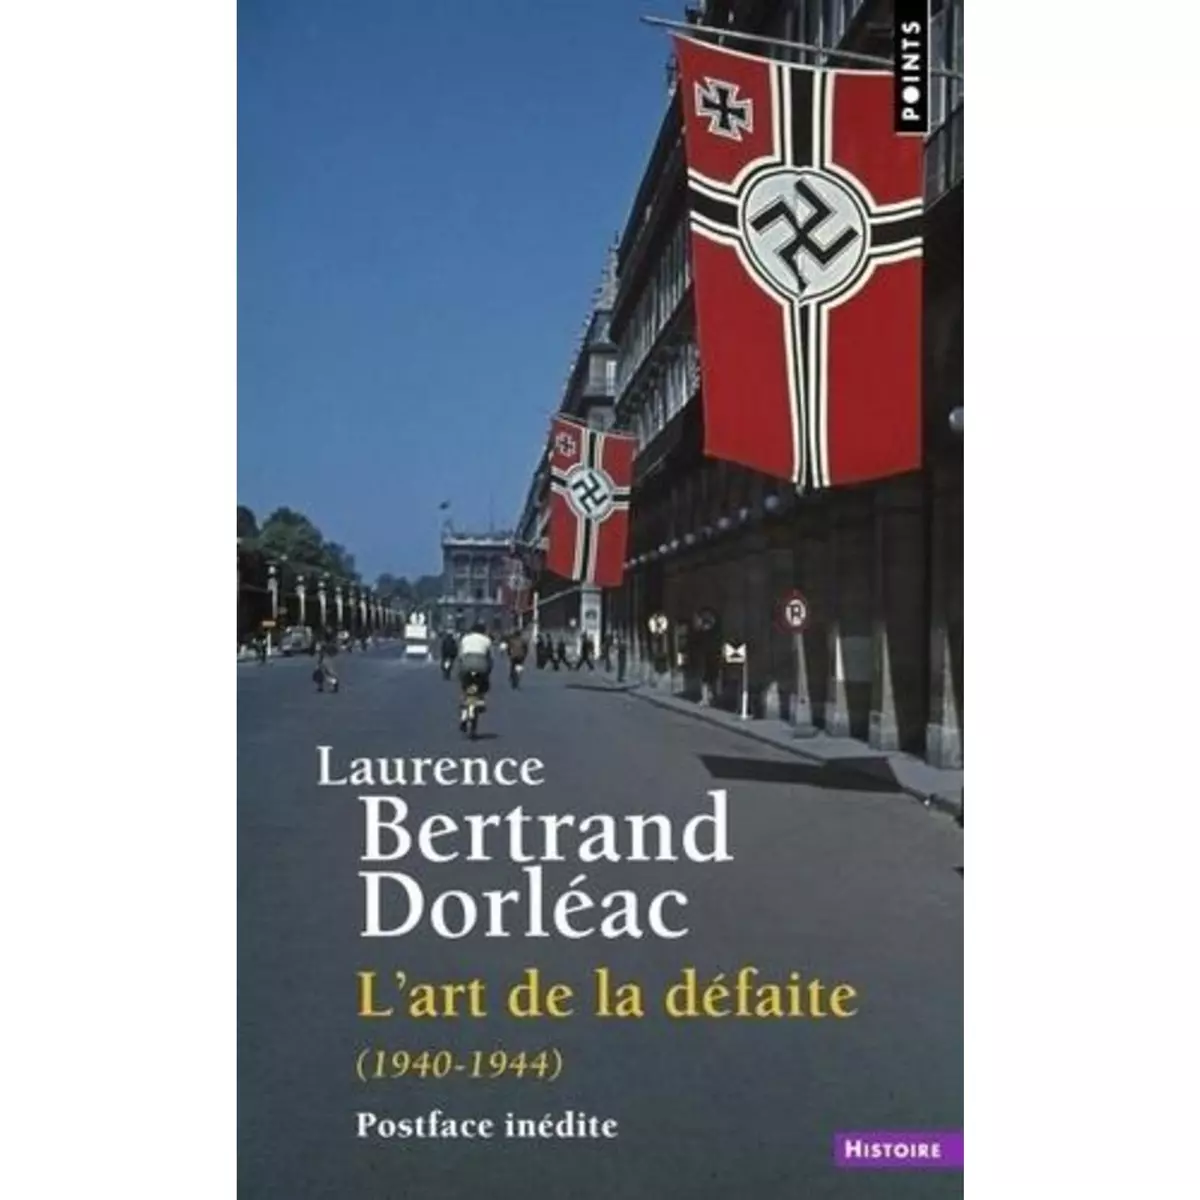  L'ART DE LA DEFAITE (1940-1944), Bertrand Dorléac Laurence